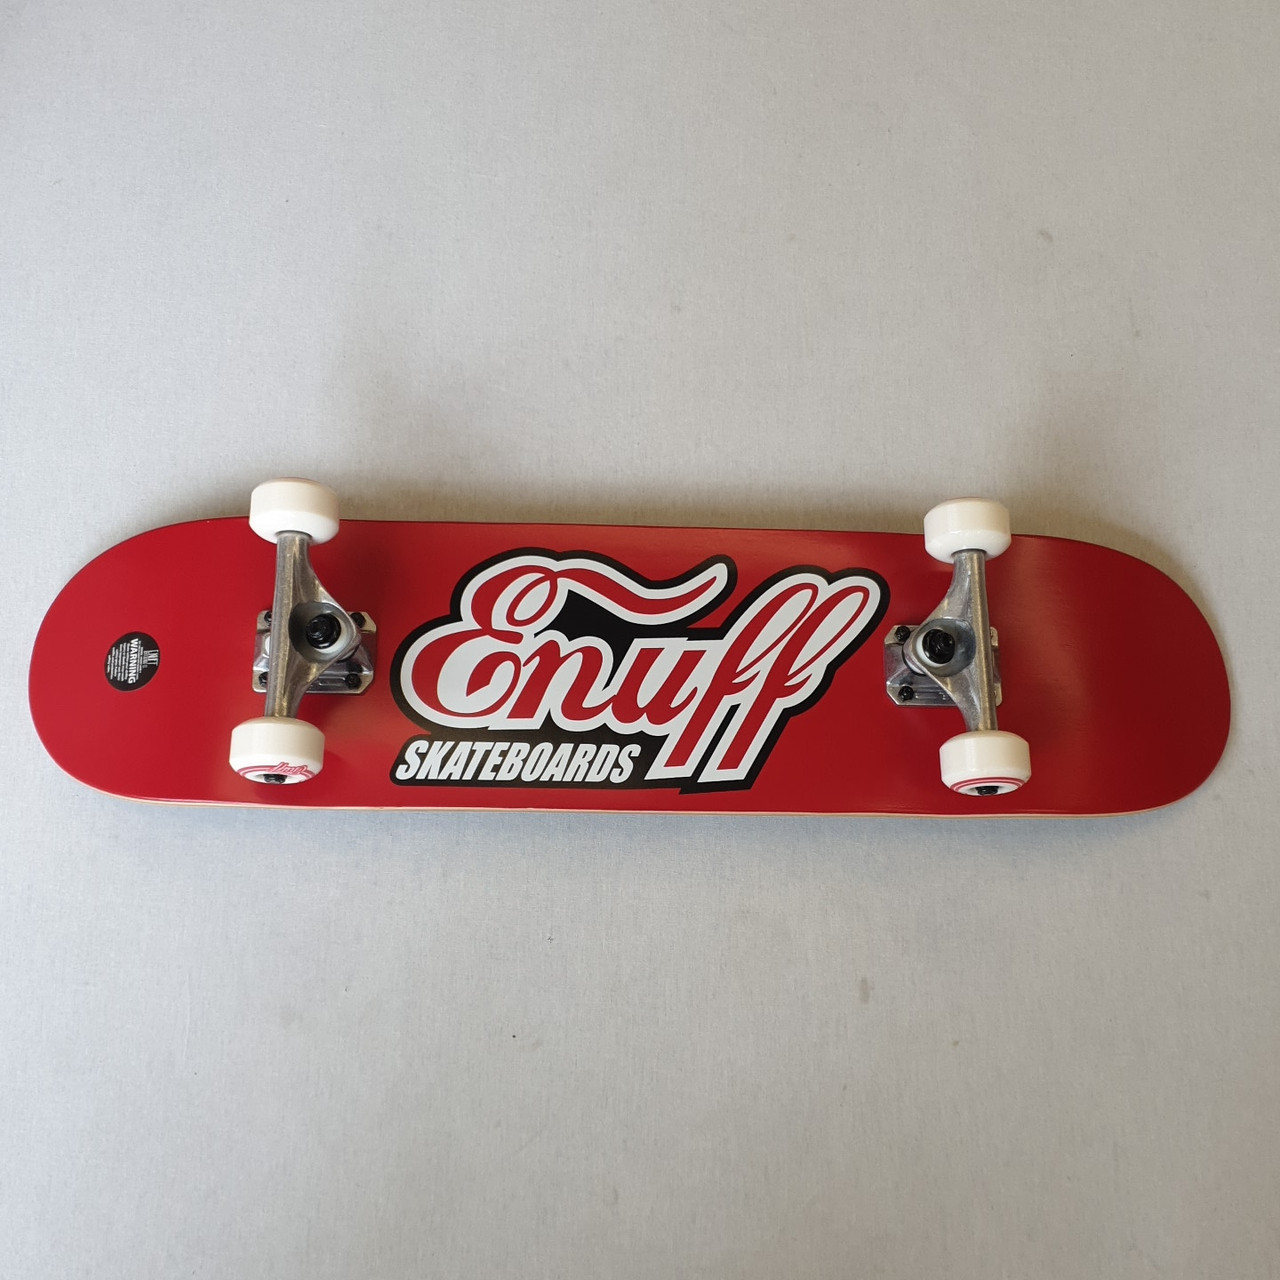 Enuff Classic Logo 7.75" Skateboard Complete